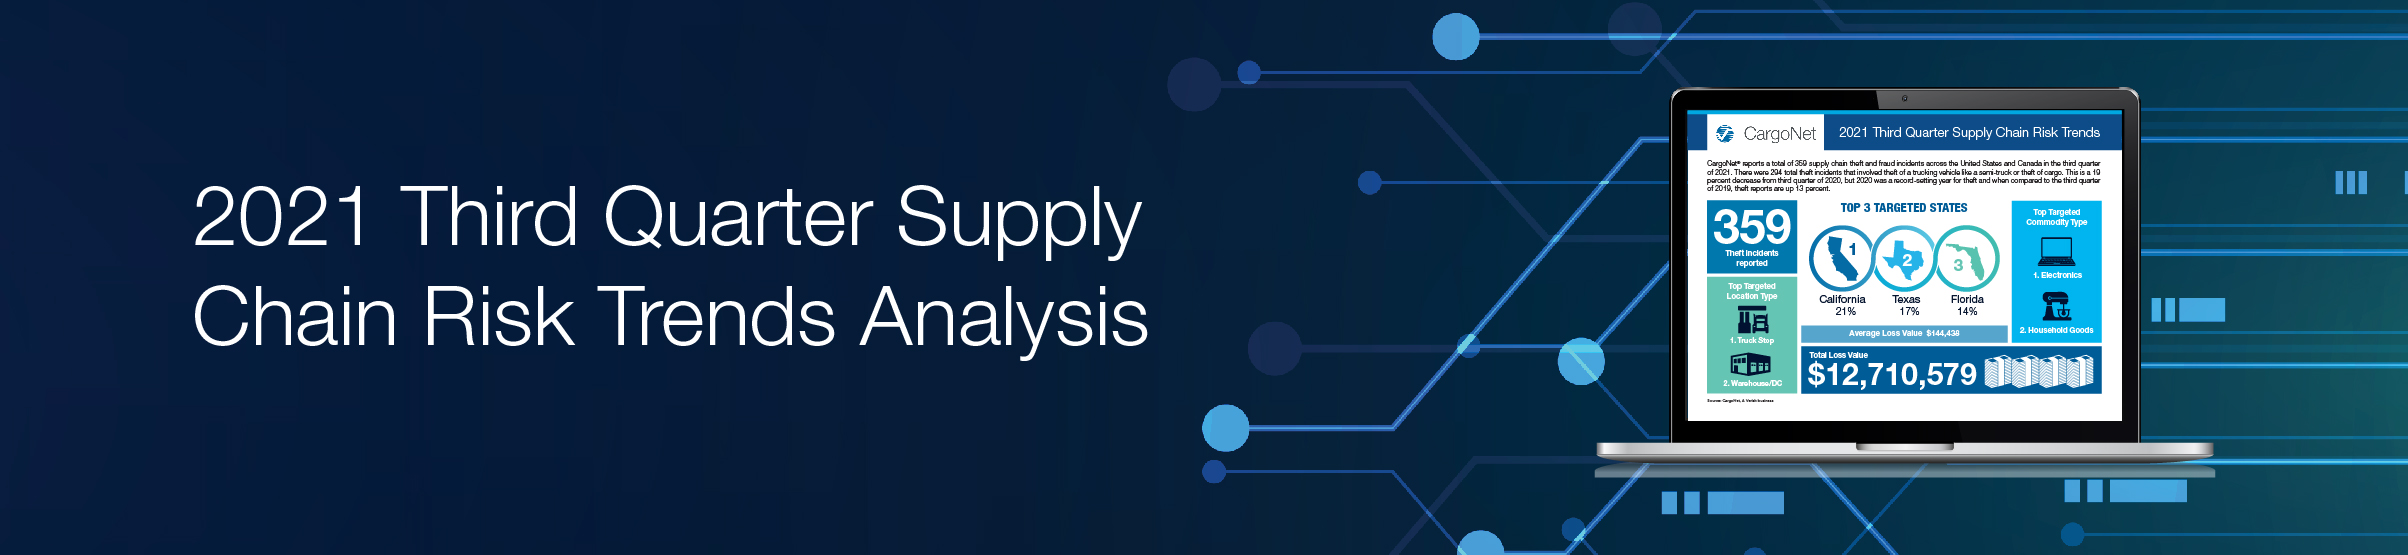 2021 Third Quarter Supply Chain Risk Trends Analysis